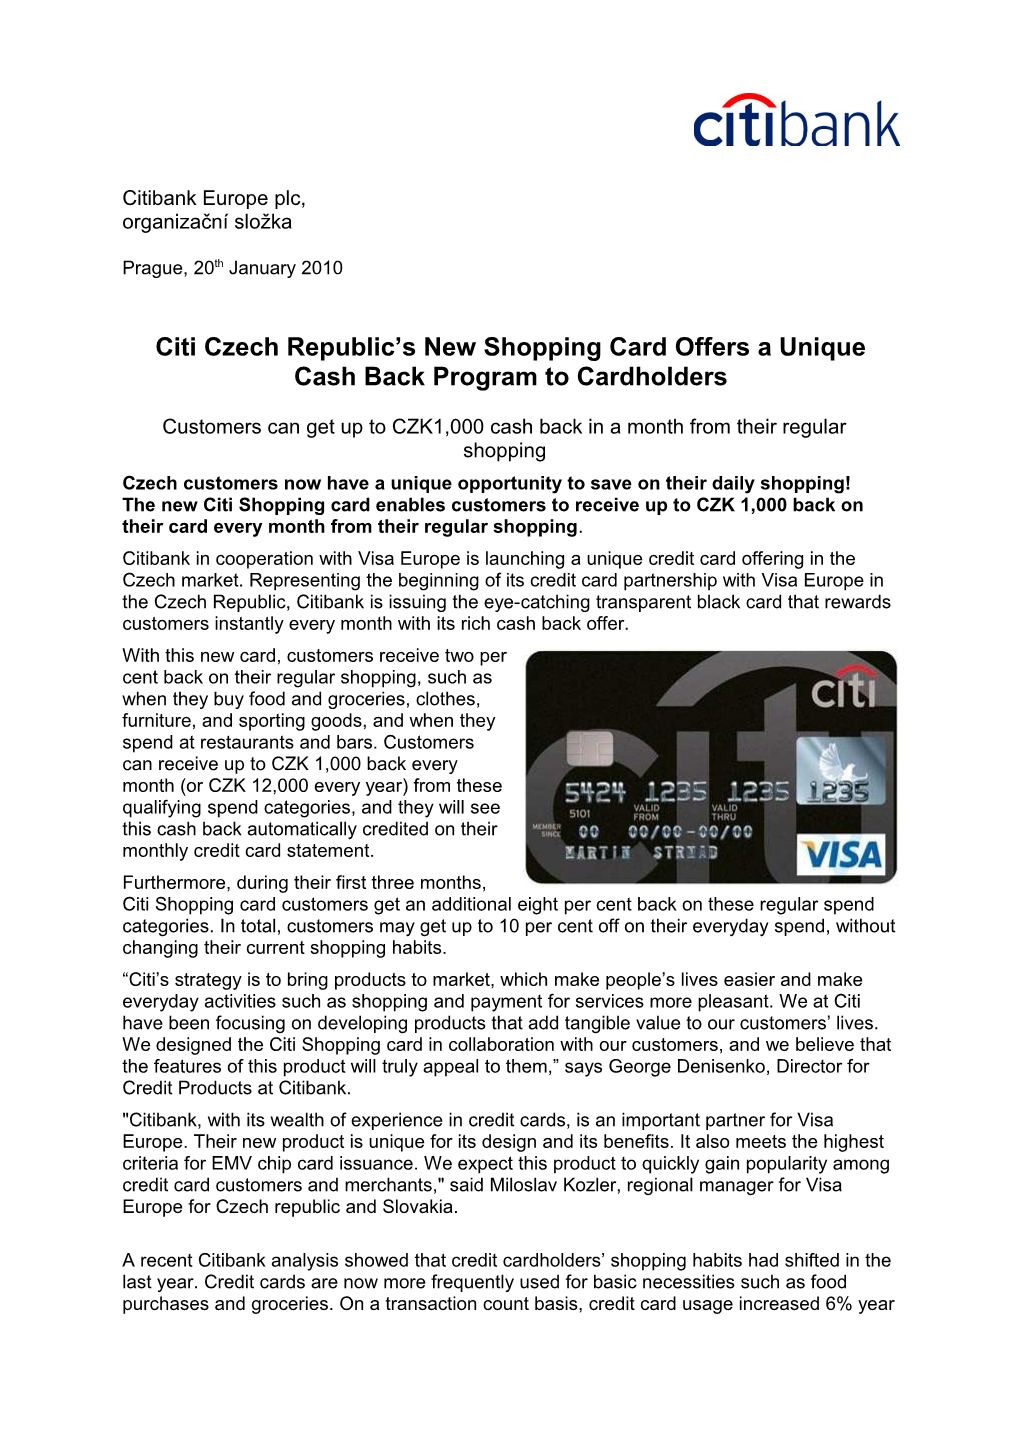 Citi Czech Republic S New Shopping Card Offers a Unique Cash Back Program to Cardholders